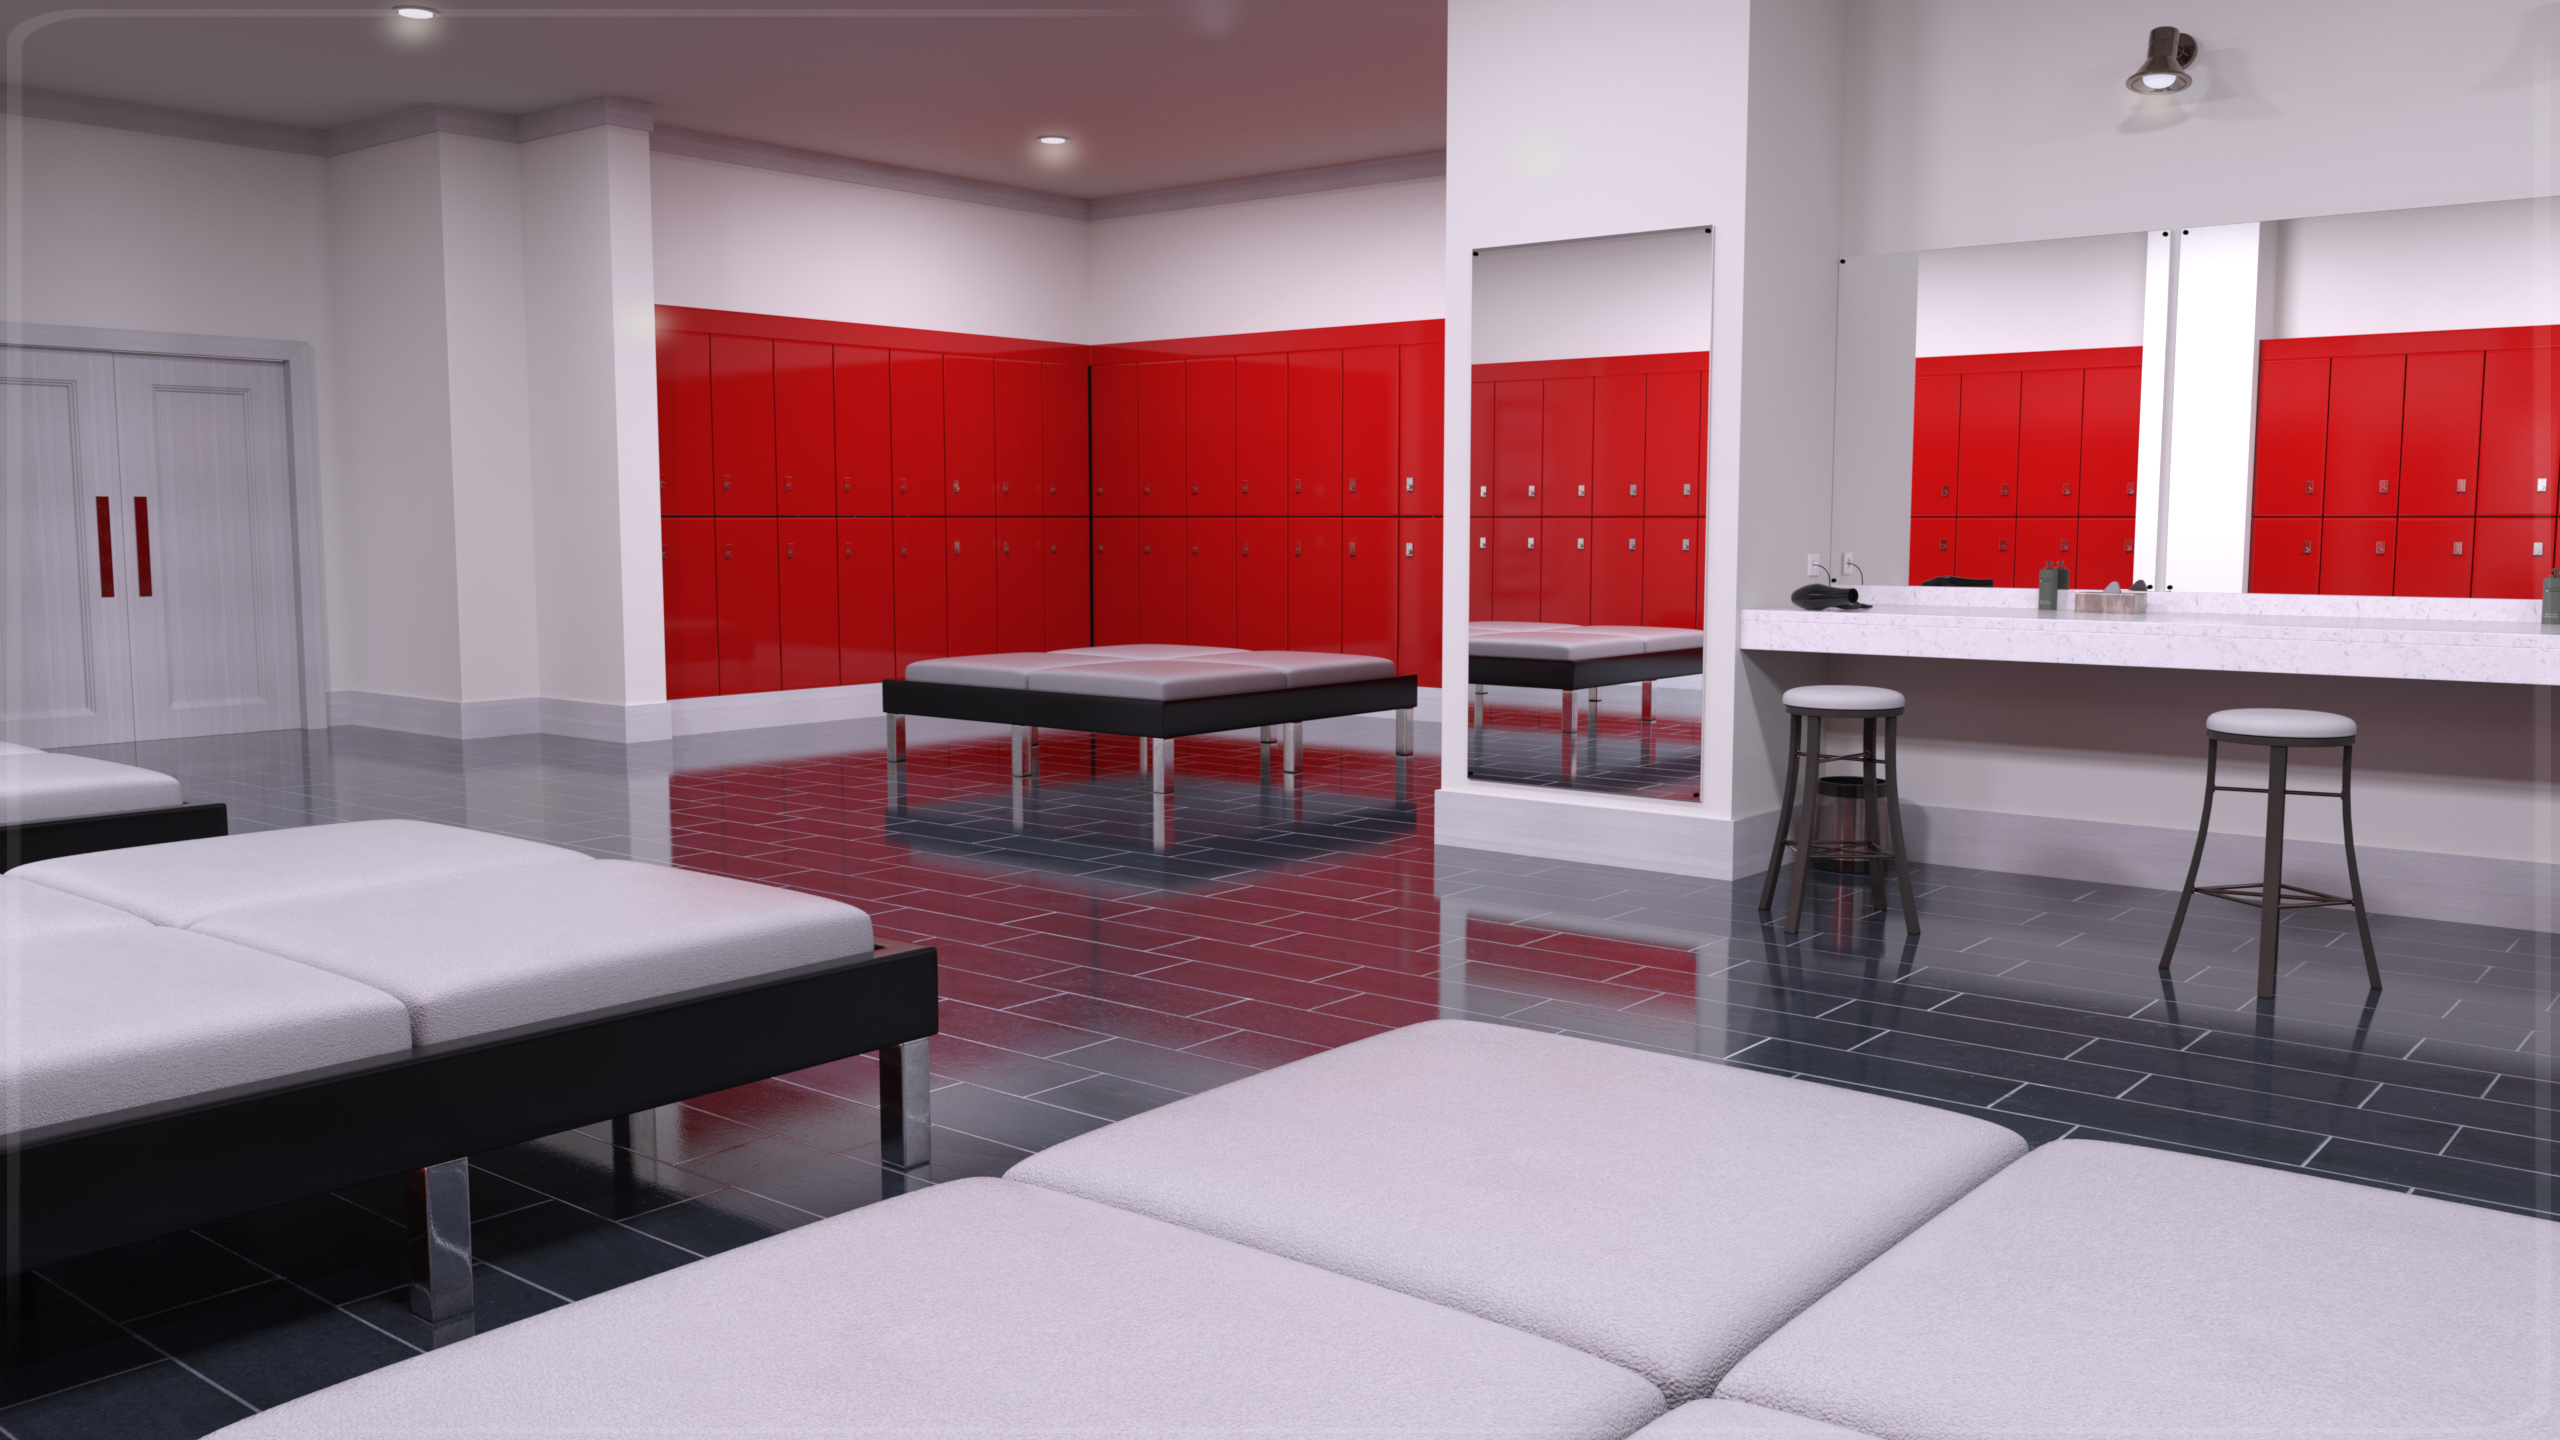 Z Changing Room Environment by: Zeddicuss, 3D Models by Daz 3D